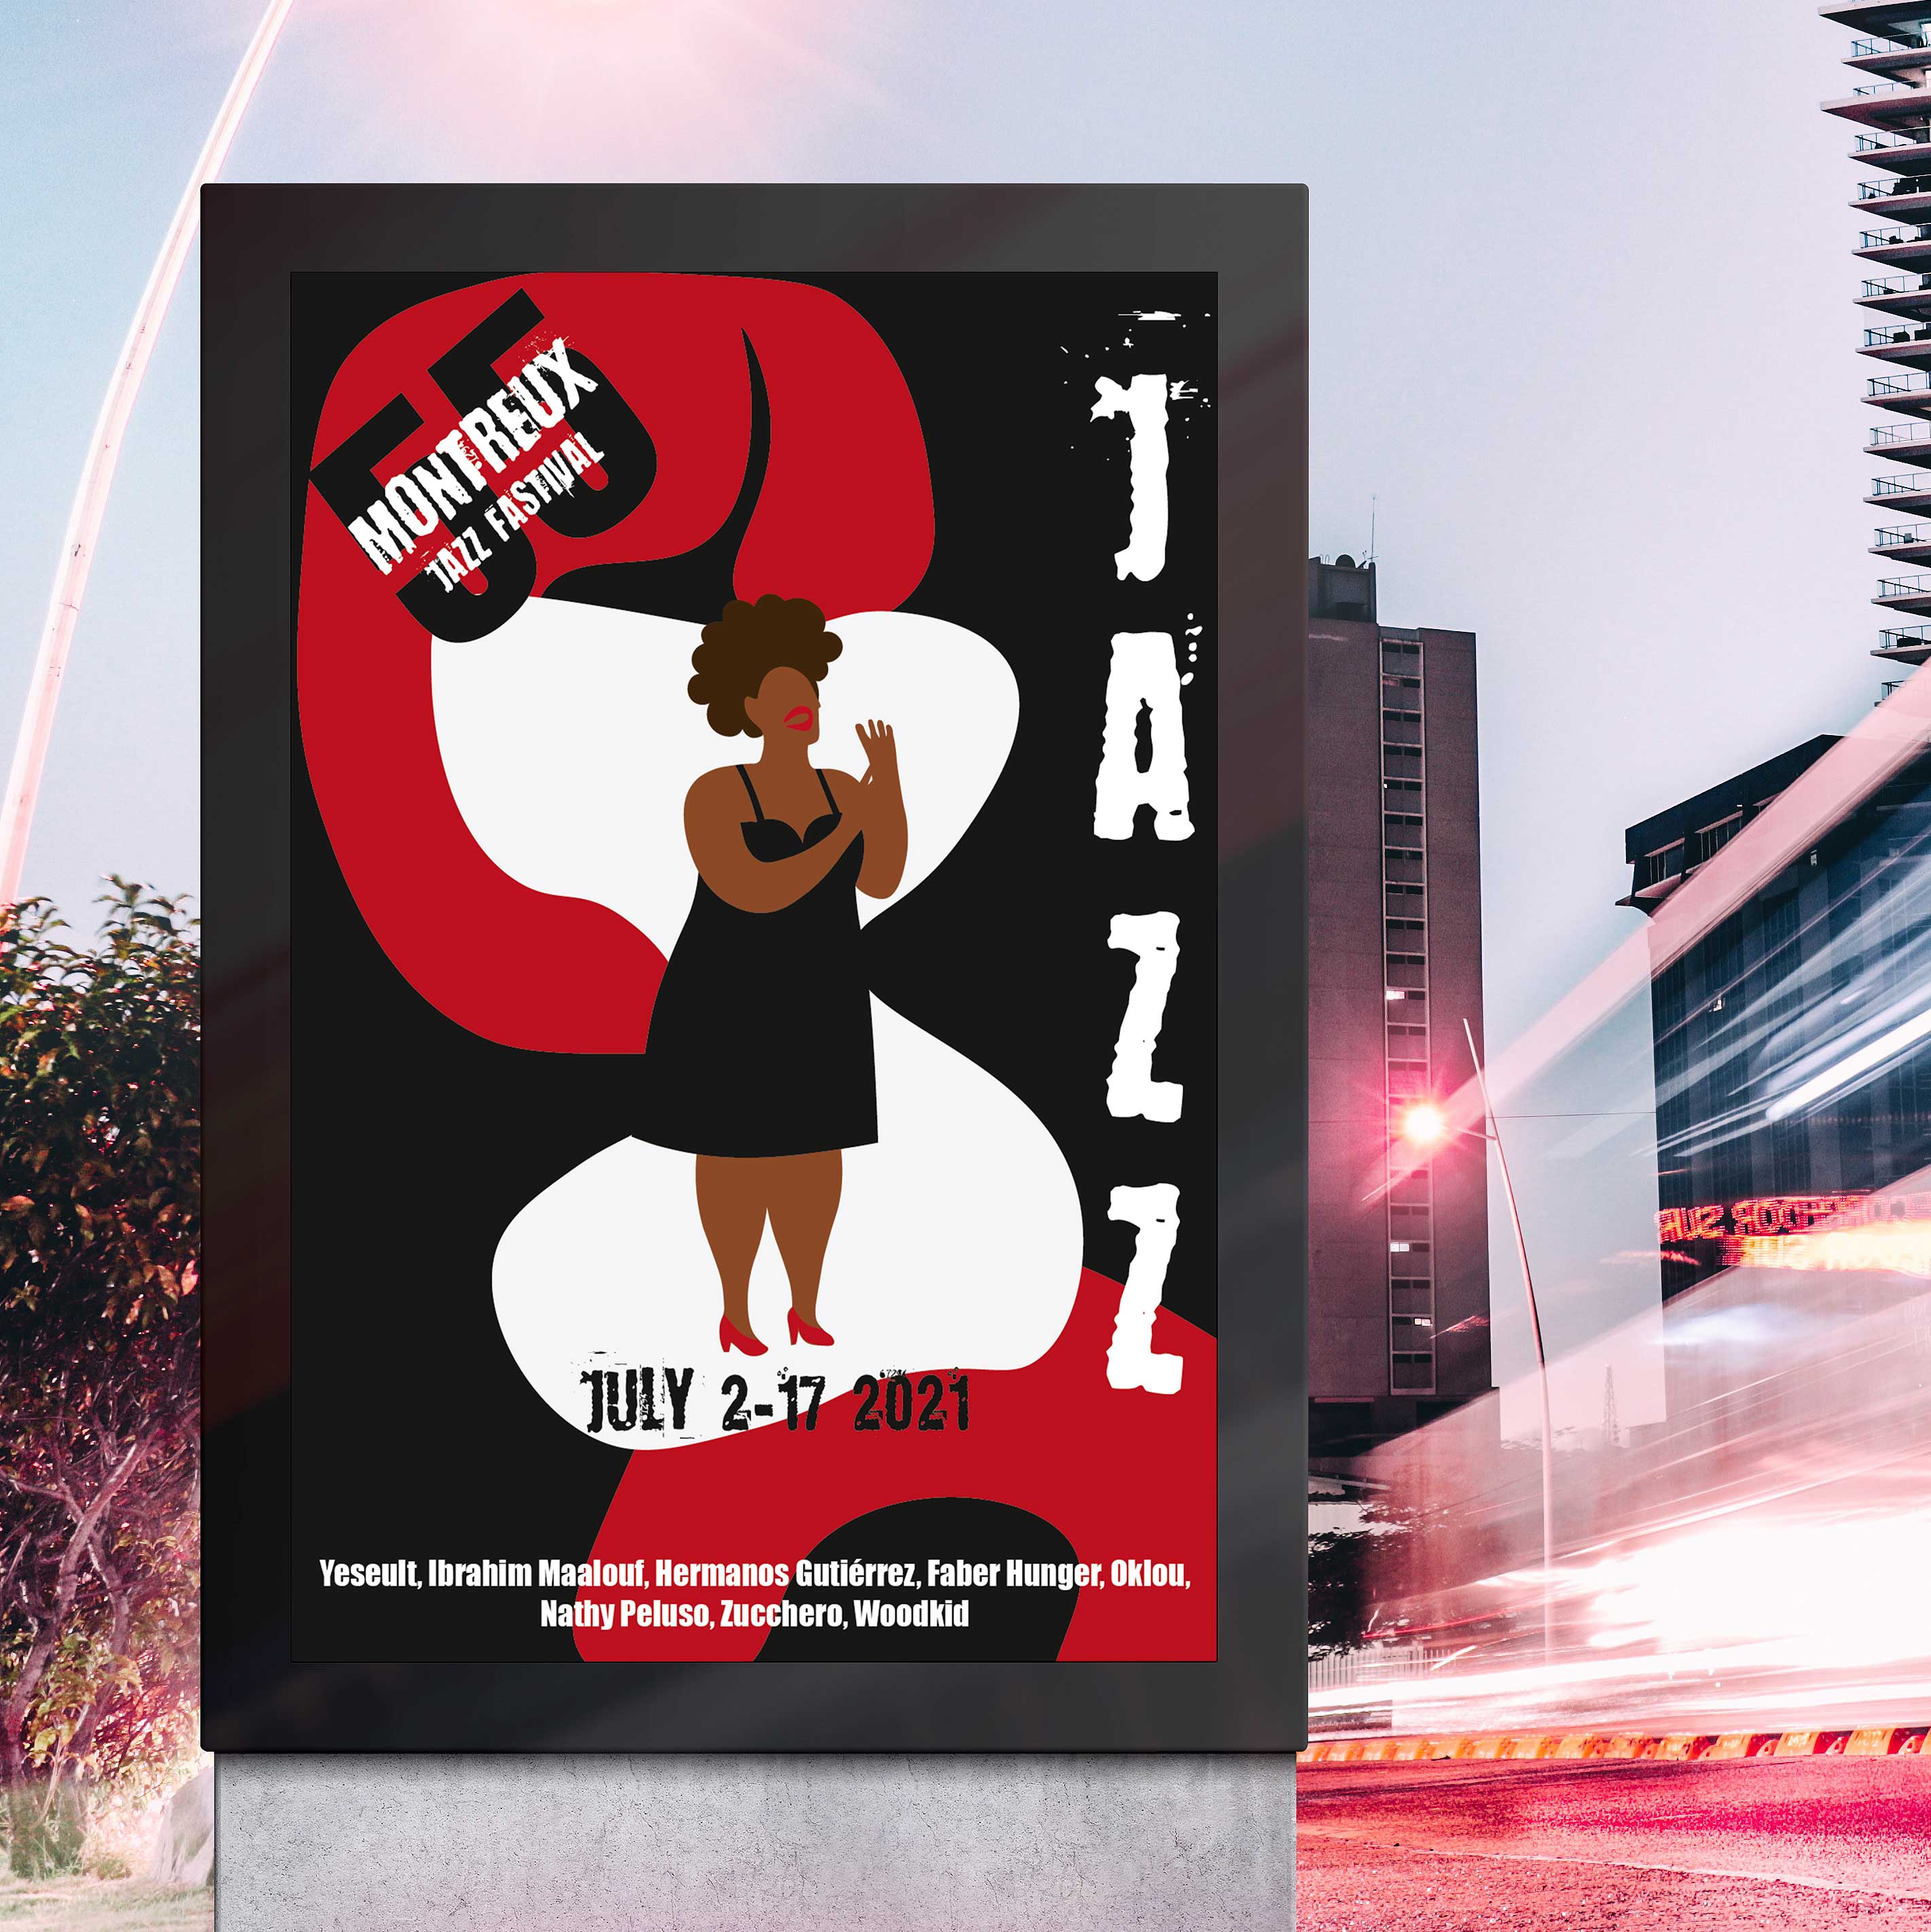 Jazz Plakat